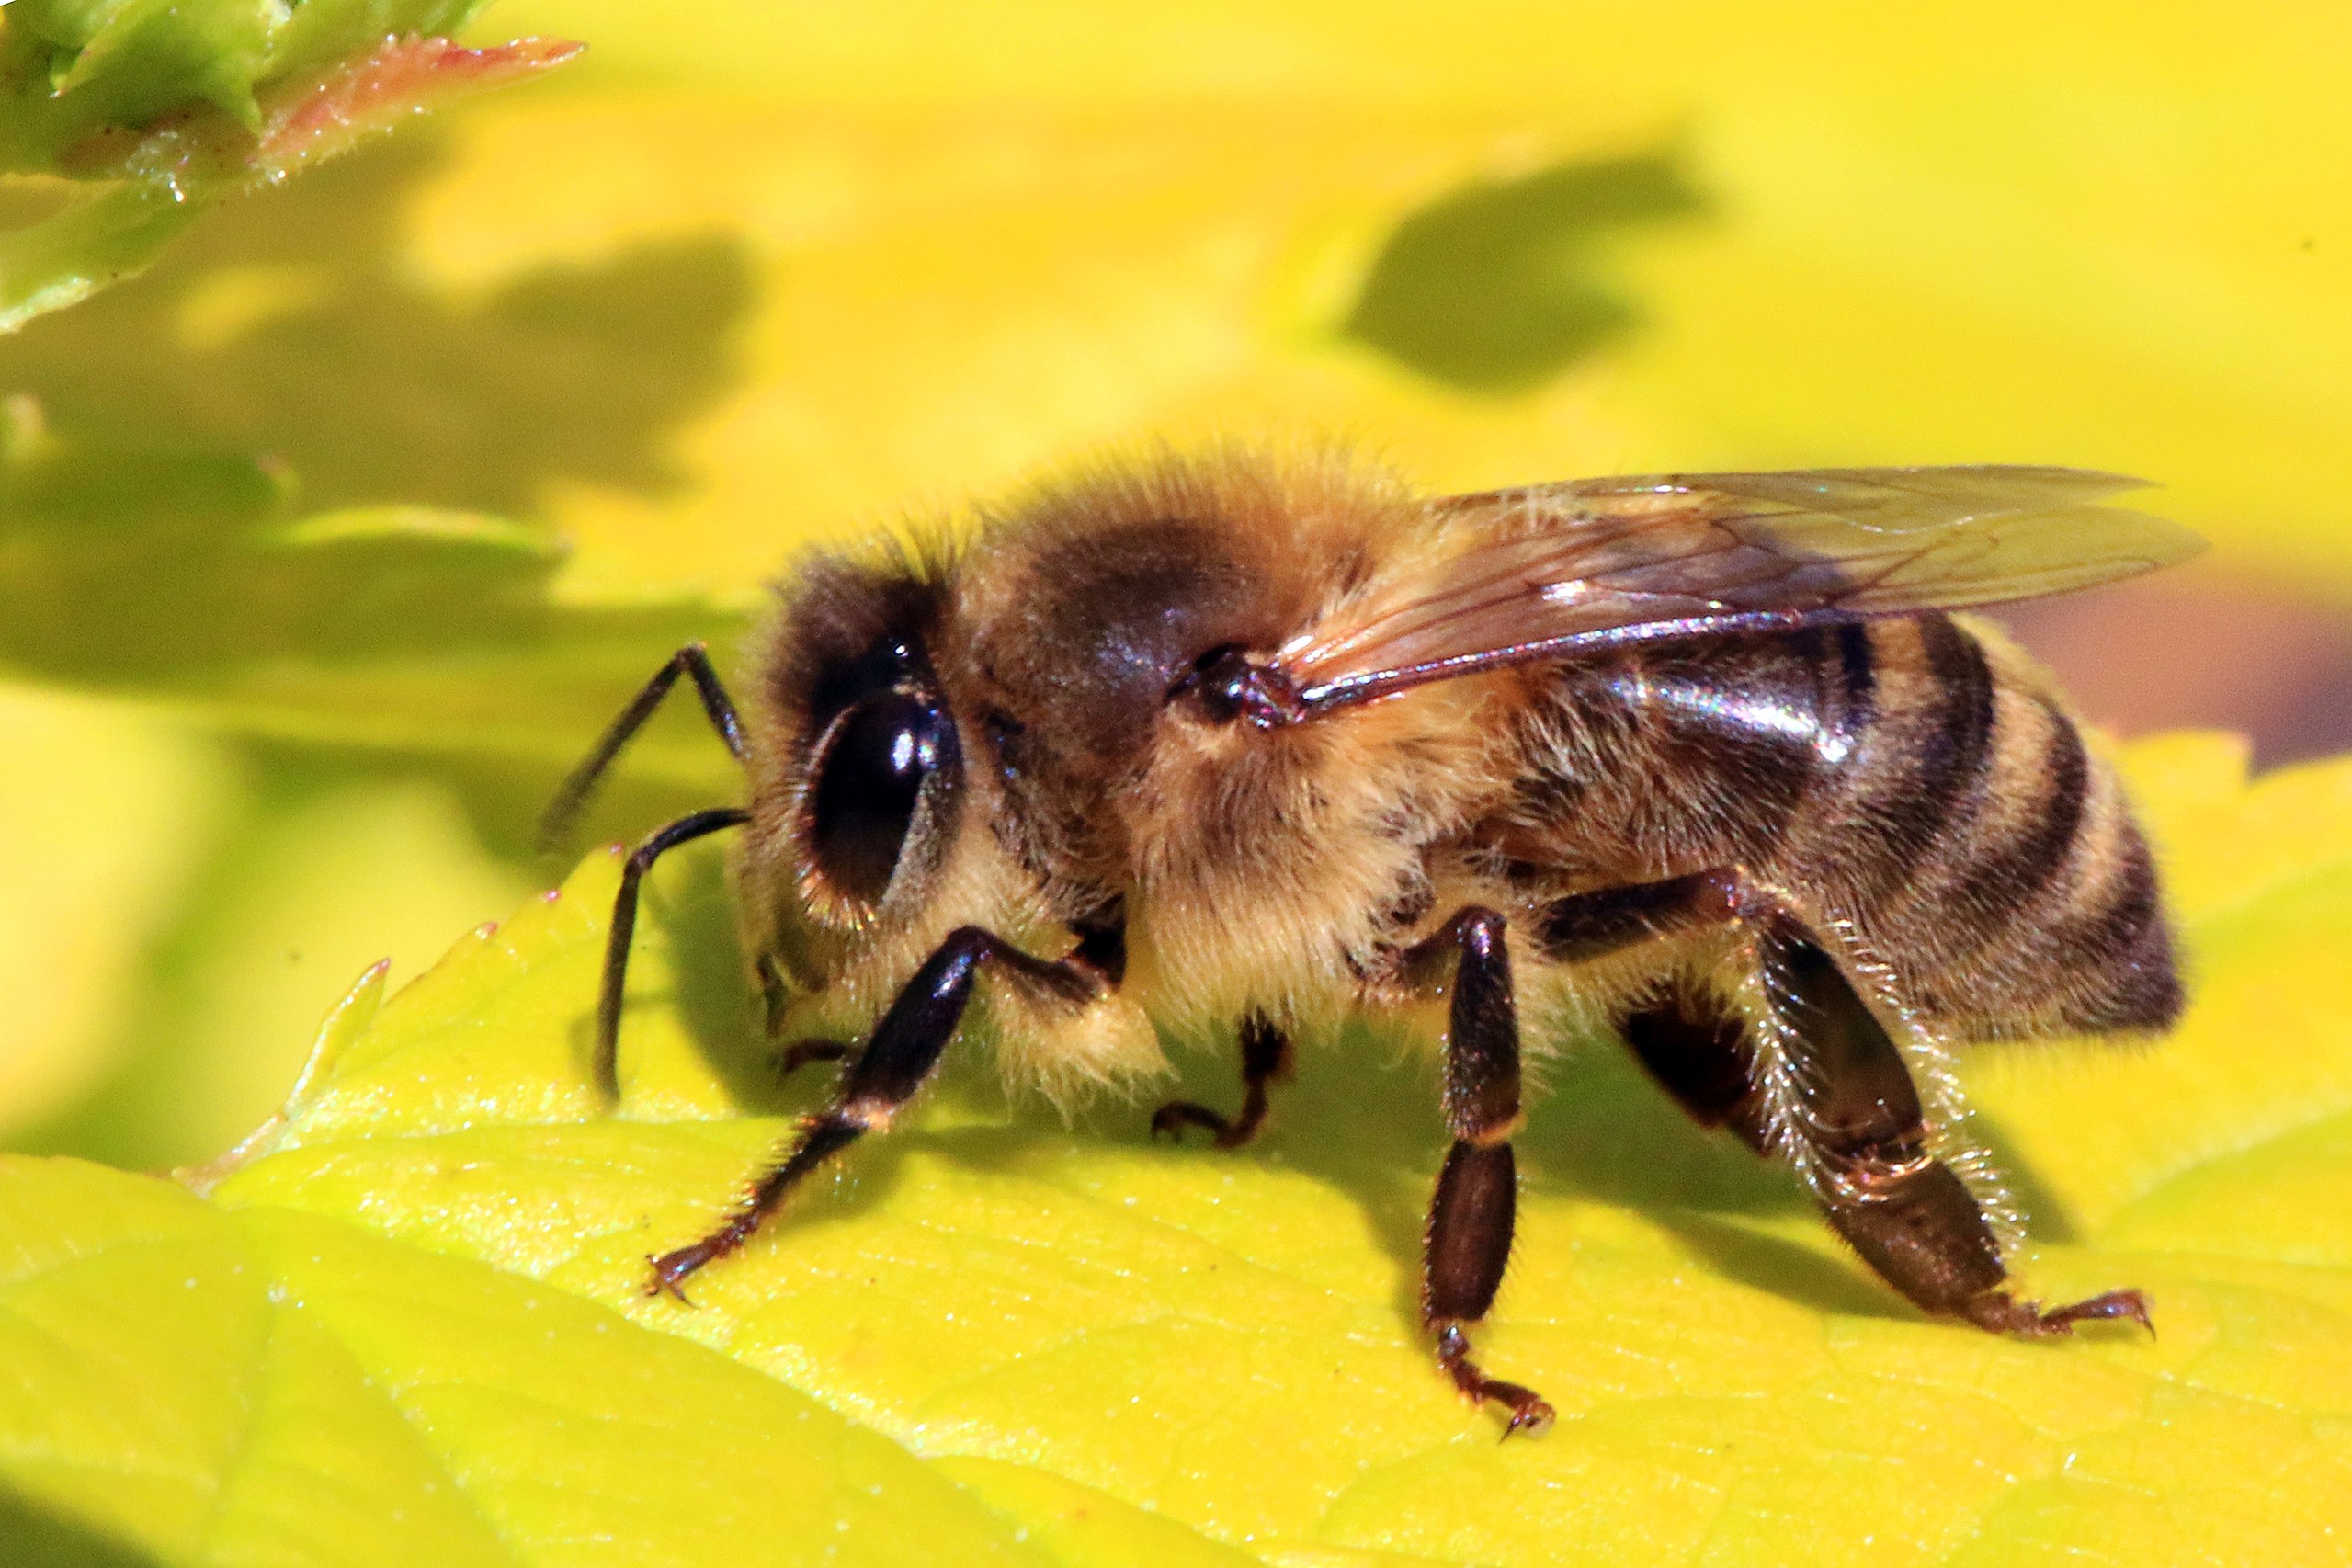 https://upload.wikimedia.org/wikipedia/commons/thumb/b/b5/Honey_bee_%28Apis_mellifera%29.jpg/2560px-Honey_bee_%28Apis_mellifera%29.jpg